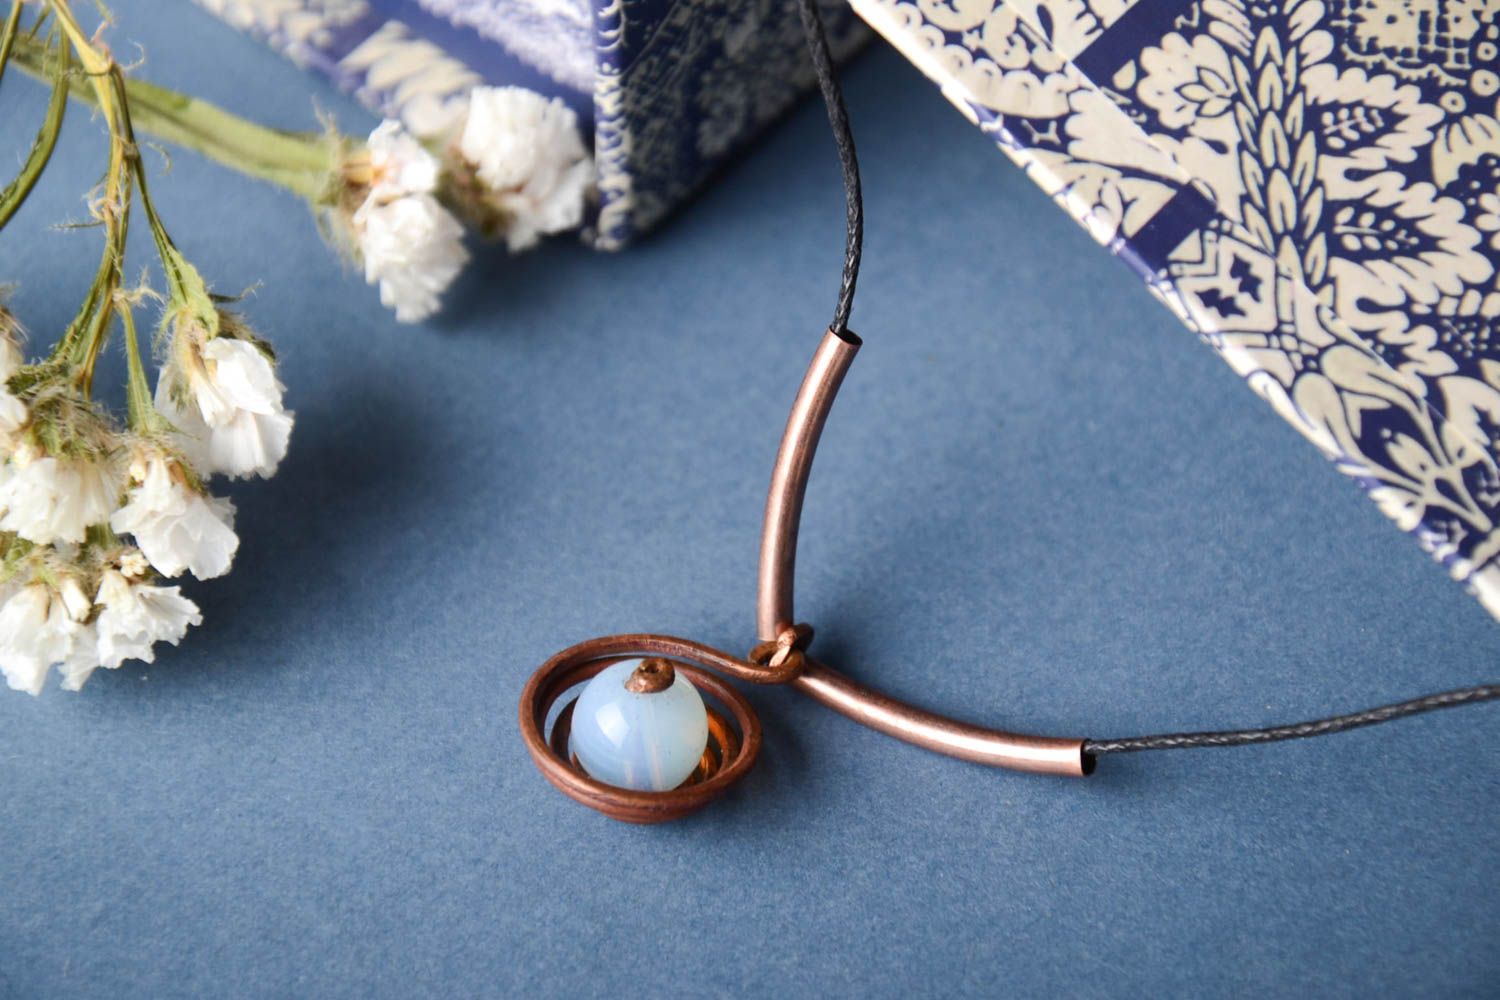 Handmade pendant metal pendant unusual jewelry designer accessory gift for her photo 1